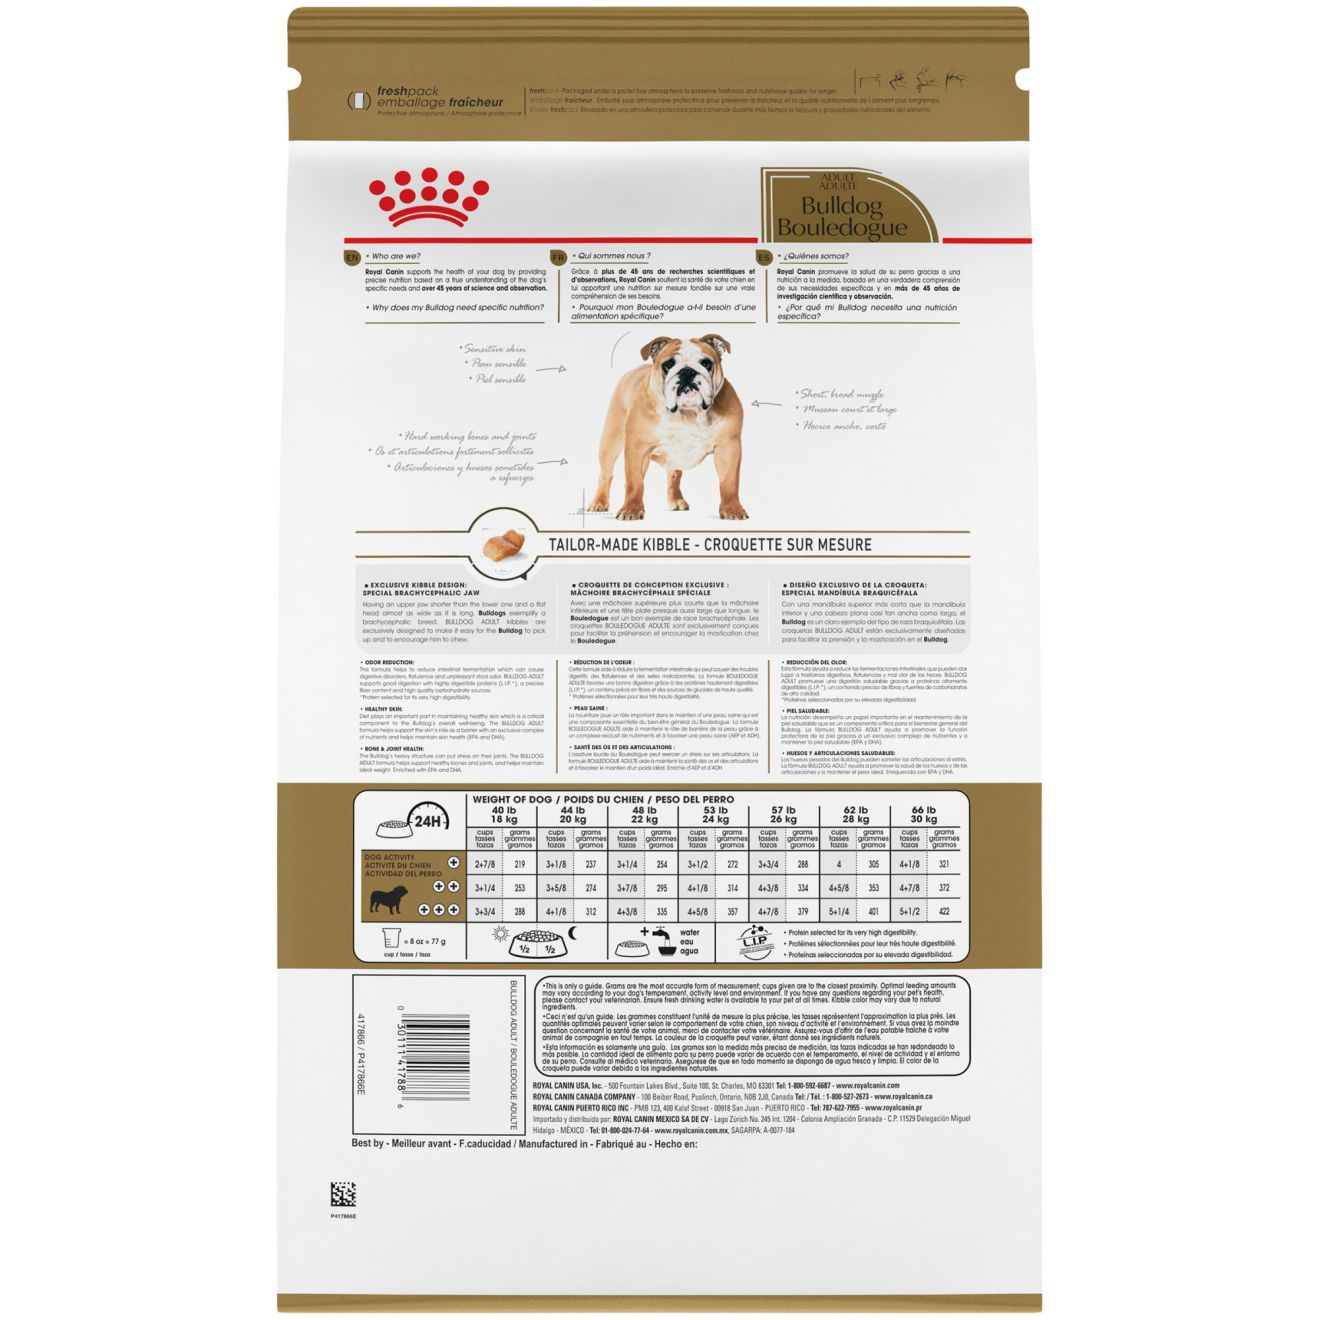 Bulldog Adult Dry Dog Food